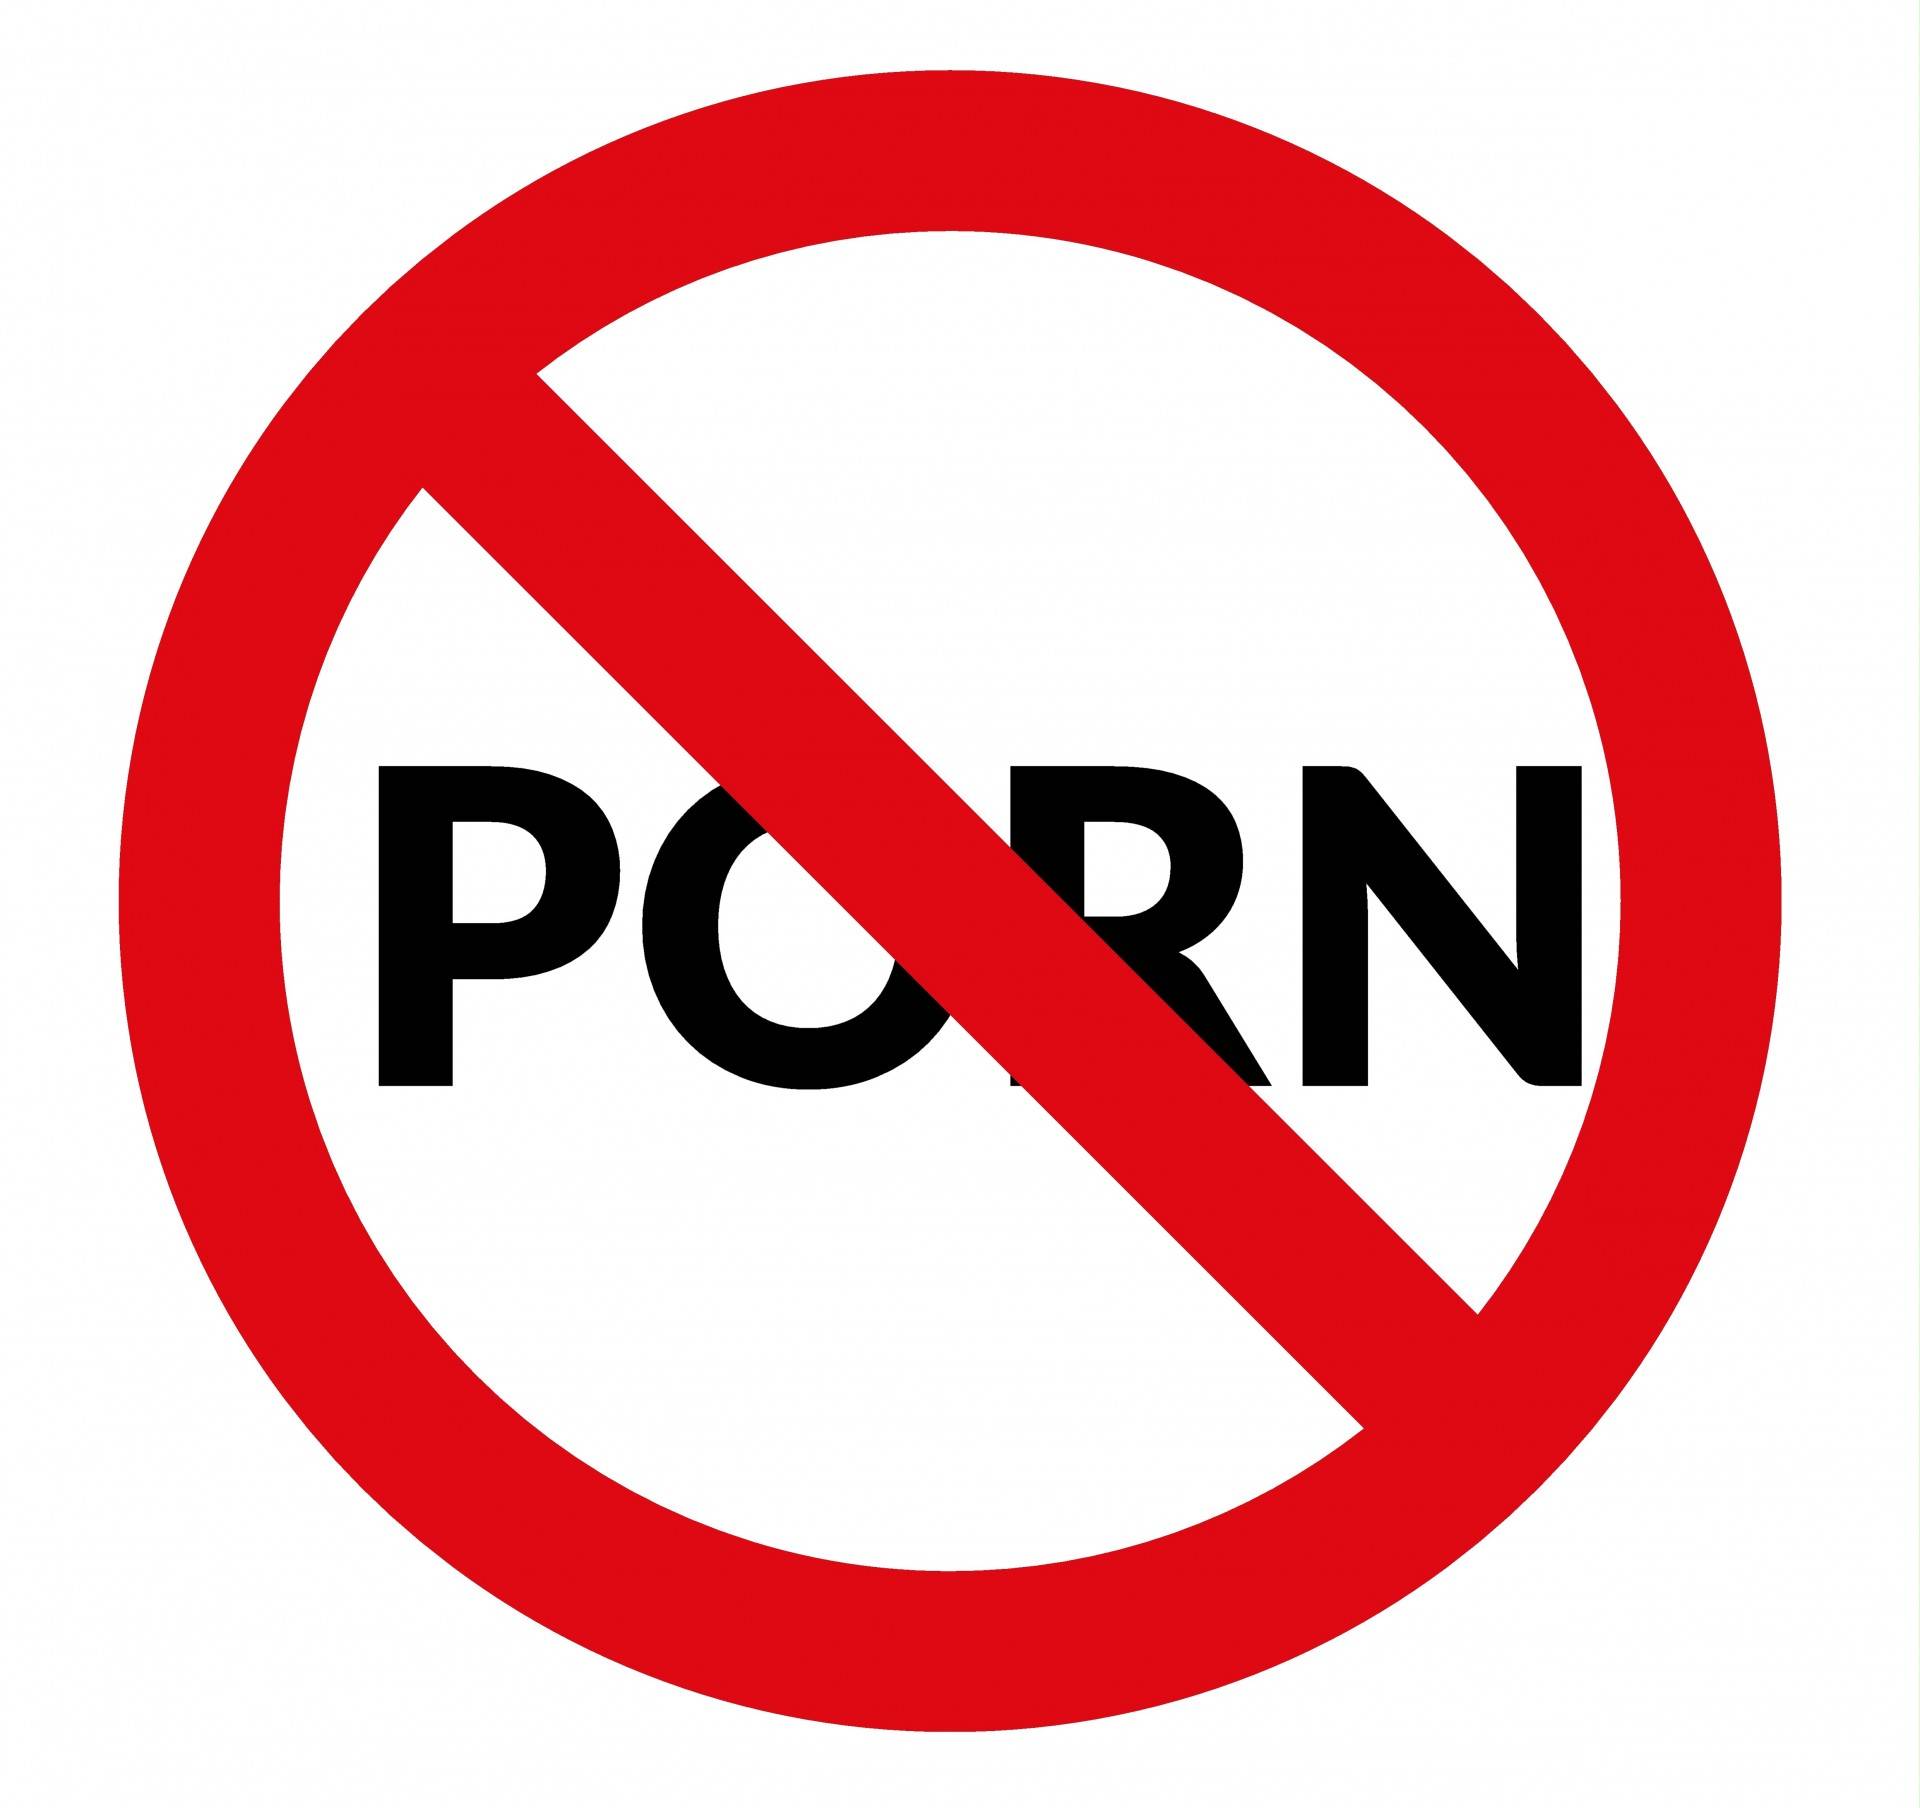 no porn warning sign | Techlog.gr - Χρήσιμα νέα τεχνολογίας